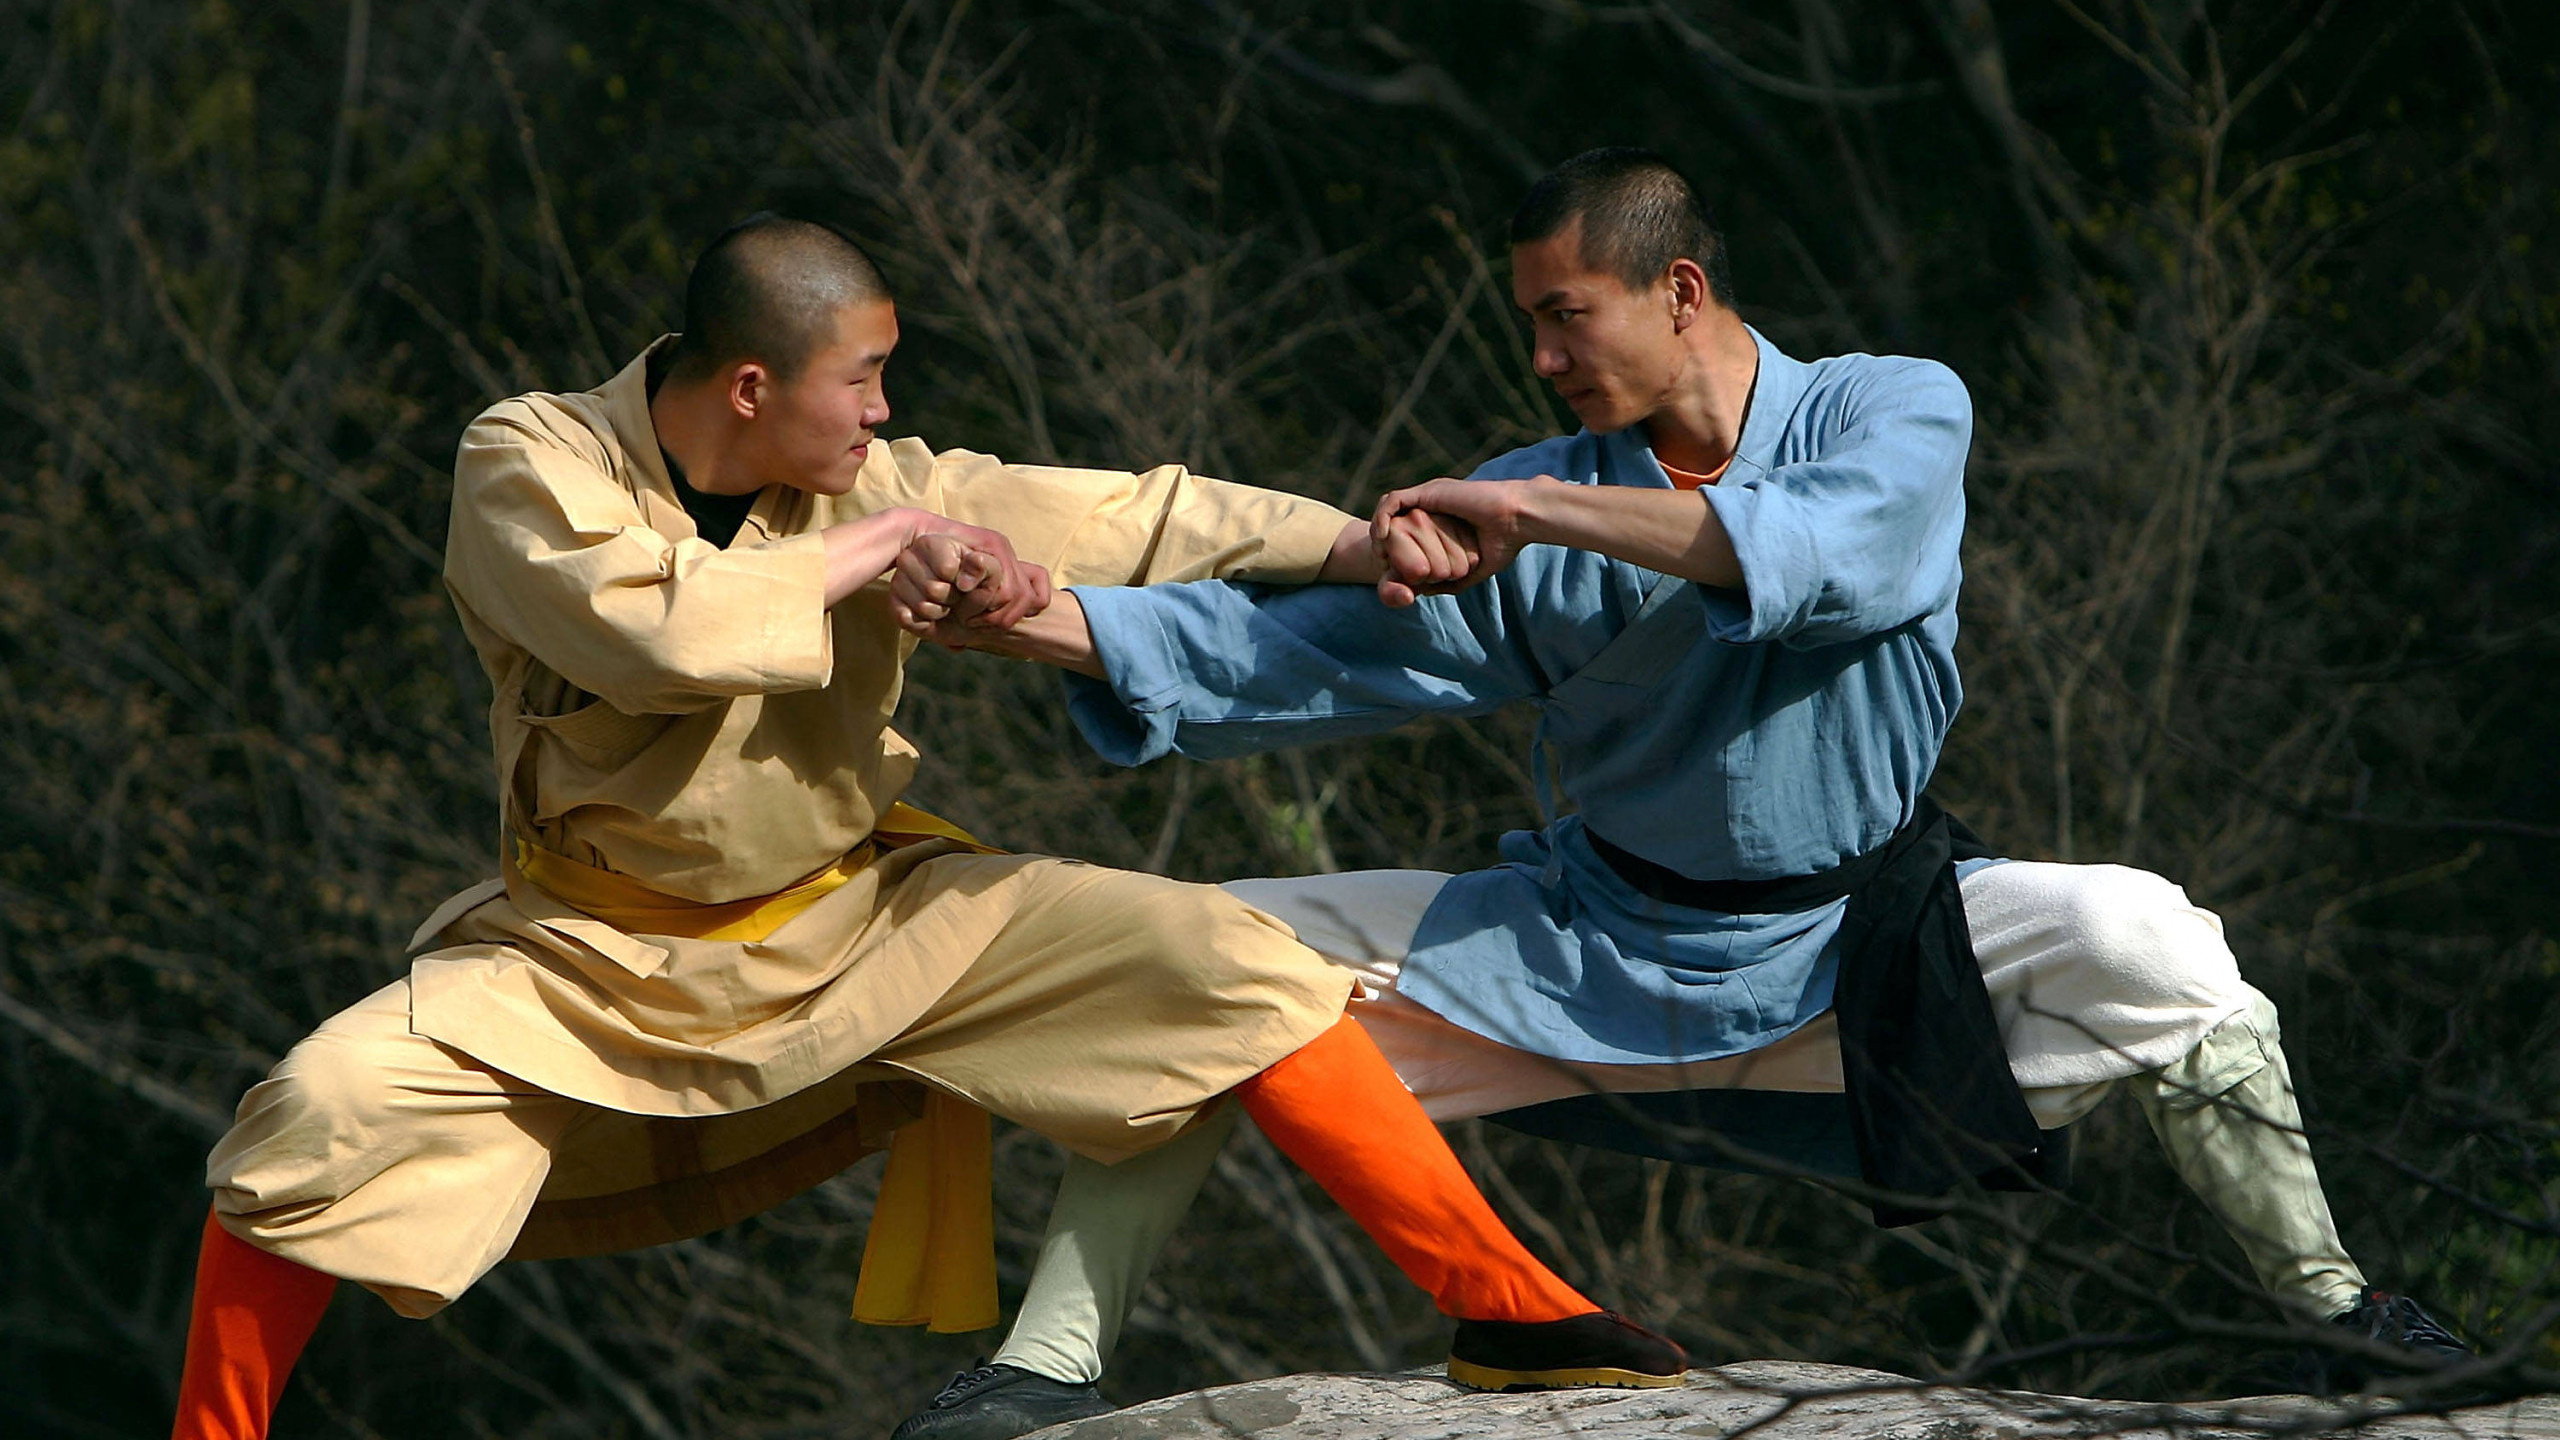 Shaolin Kung Fu: Kata training by two Shaolin monks, External meditation as a training. 2560x1440 HD Background.